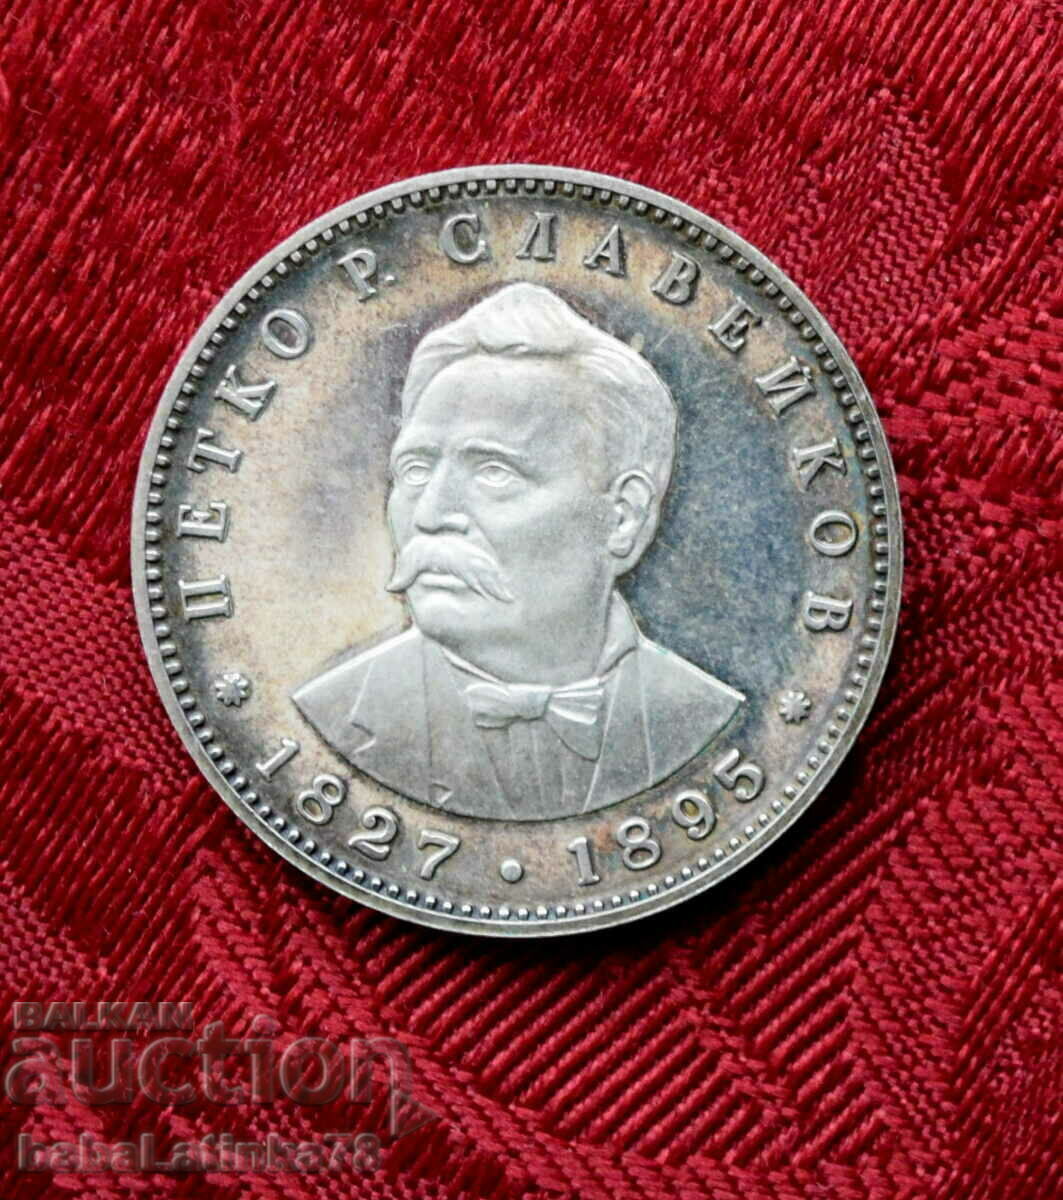 BGN 5 coin. Petko Slaveikov 1977